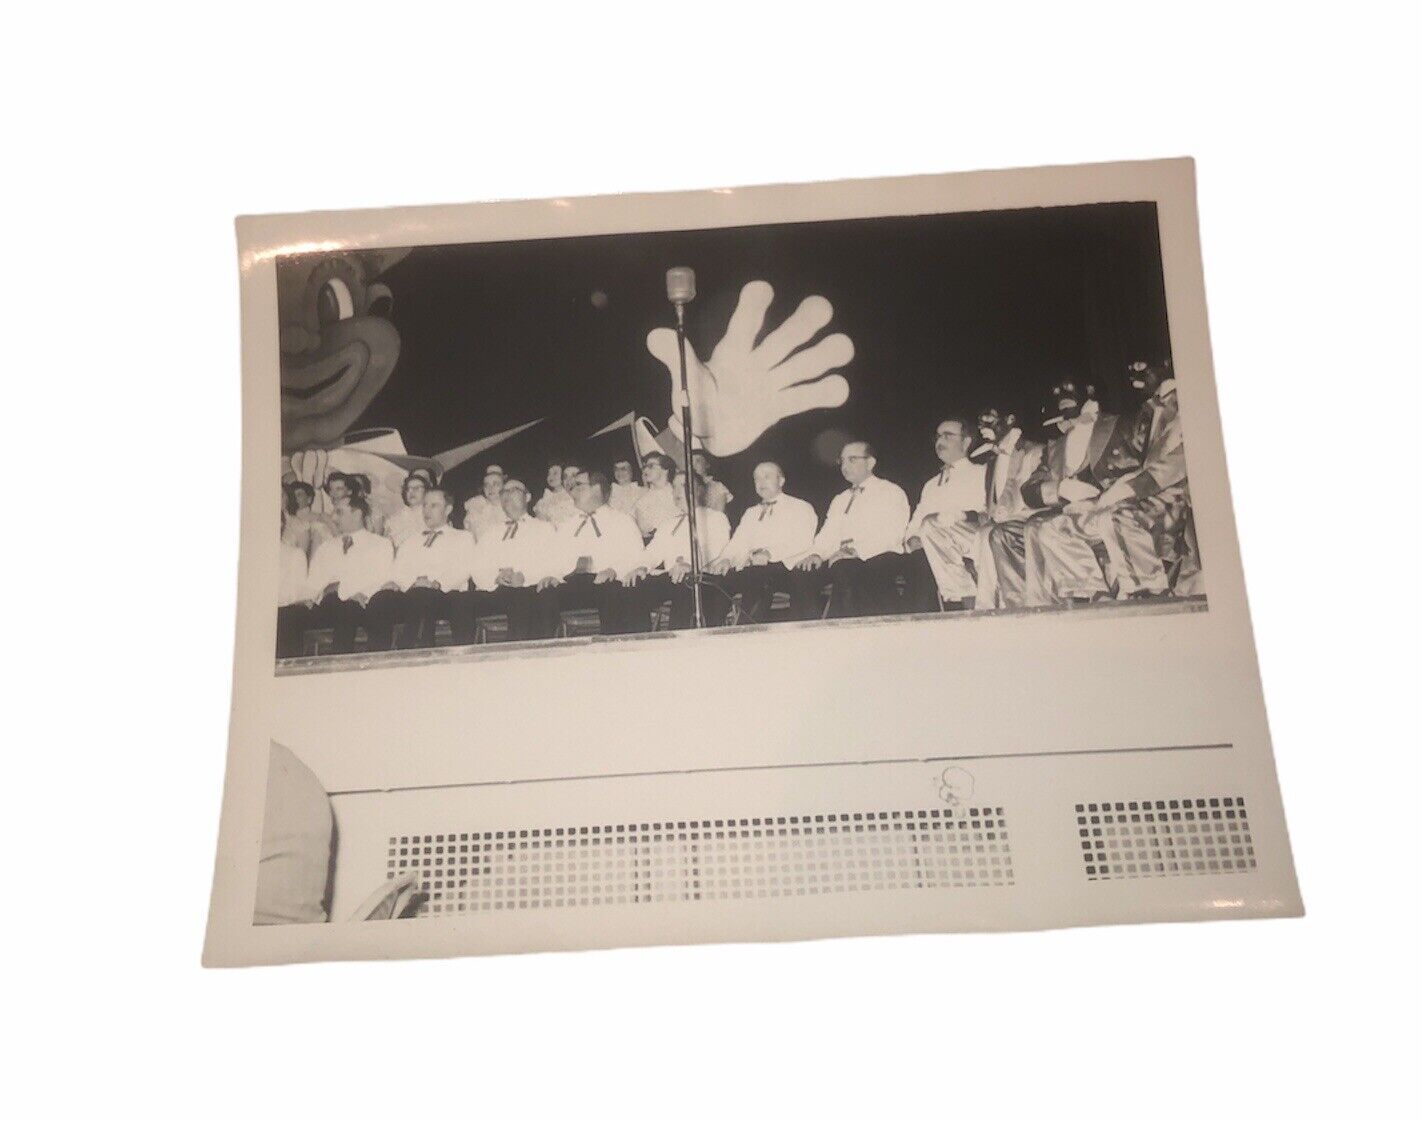 1930’s-1940’s Era Photograph Of Live Performance